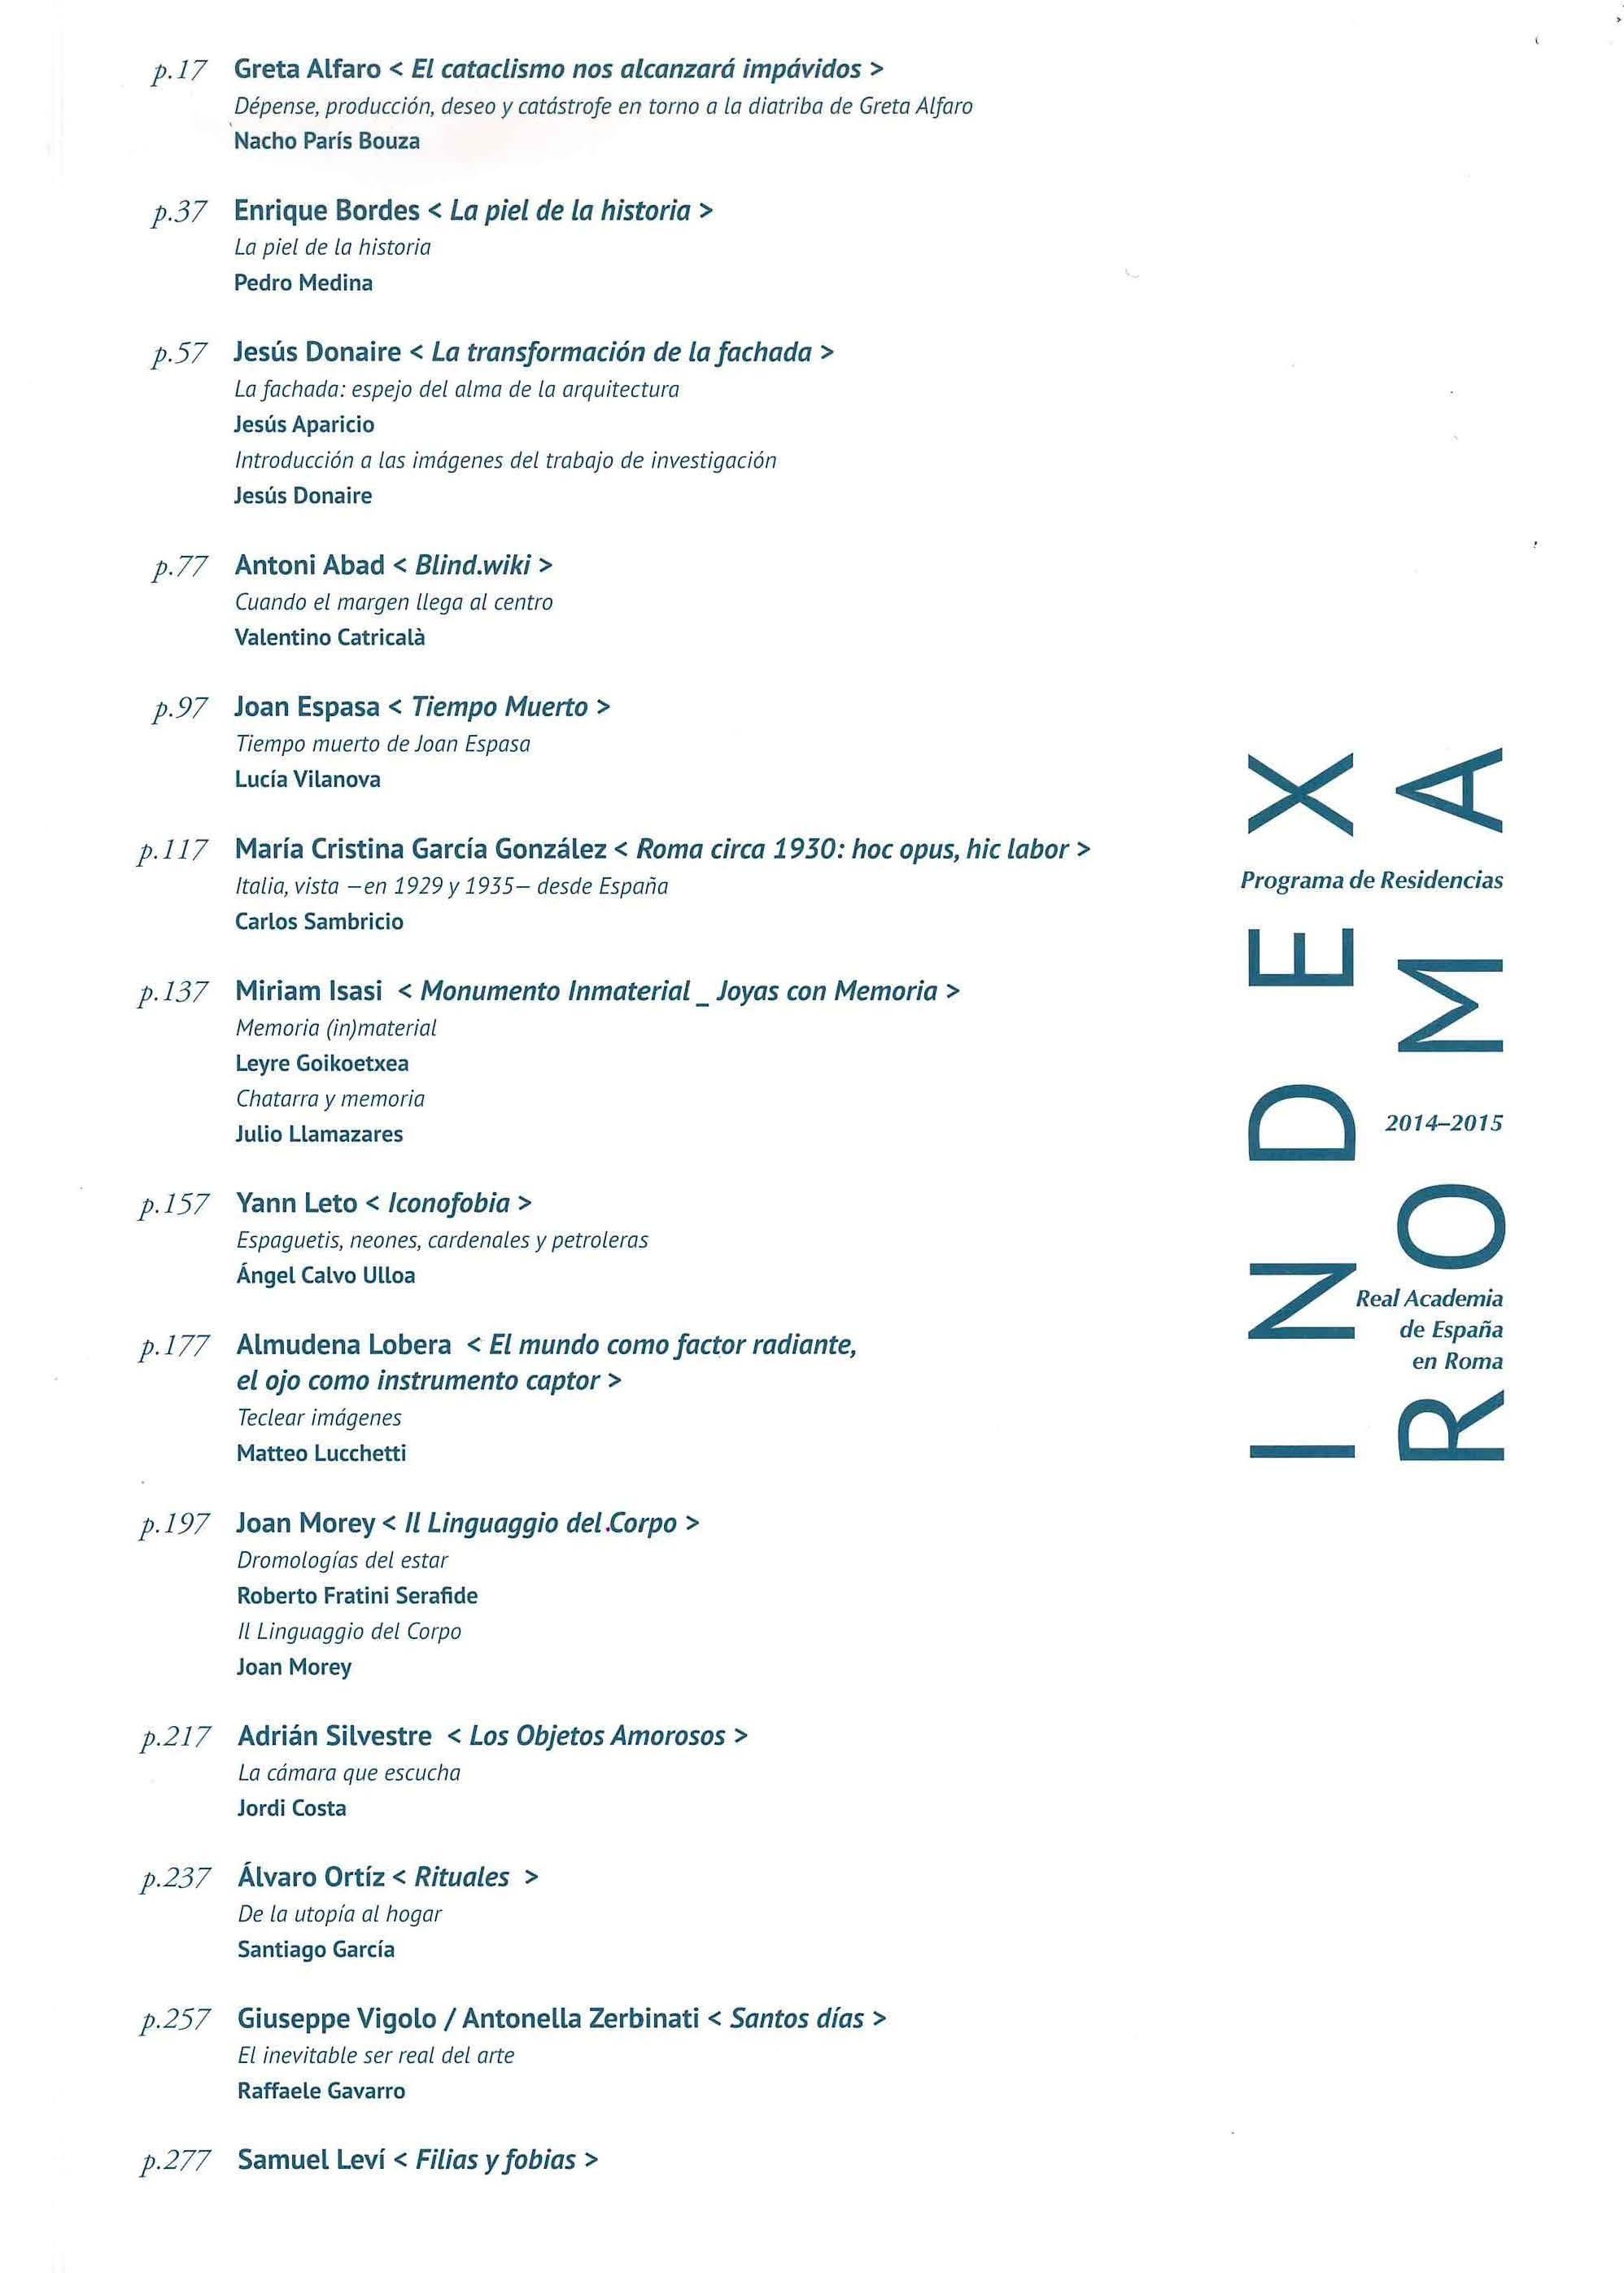 INDEX ROMA. PROGRAMA DE RESIDENCIAS EN LA REAL ACADEMIA DE ESPAÑA EN ROMA 204-2015